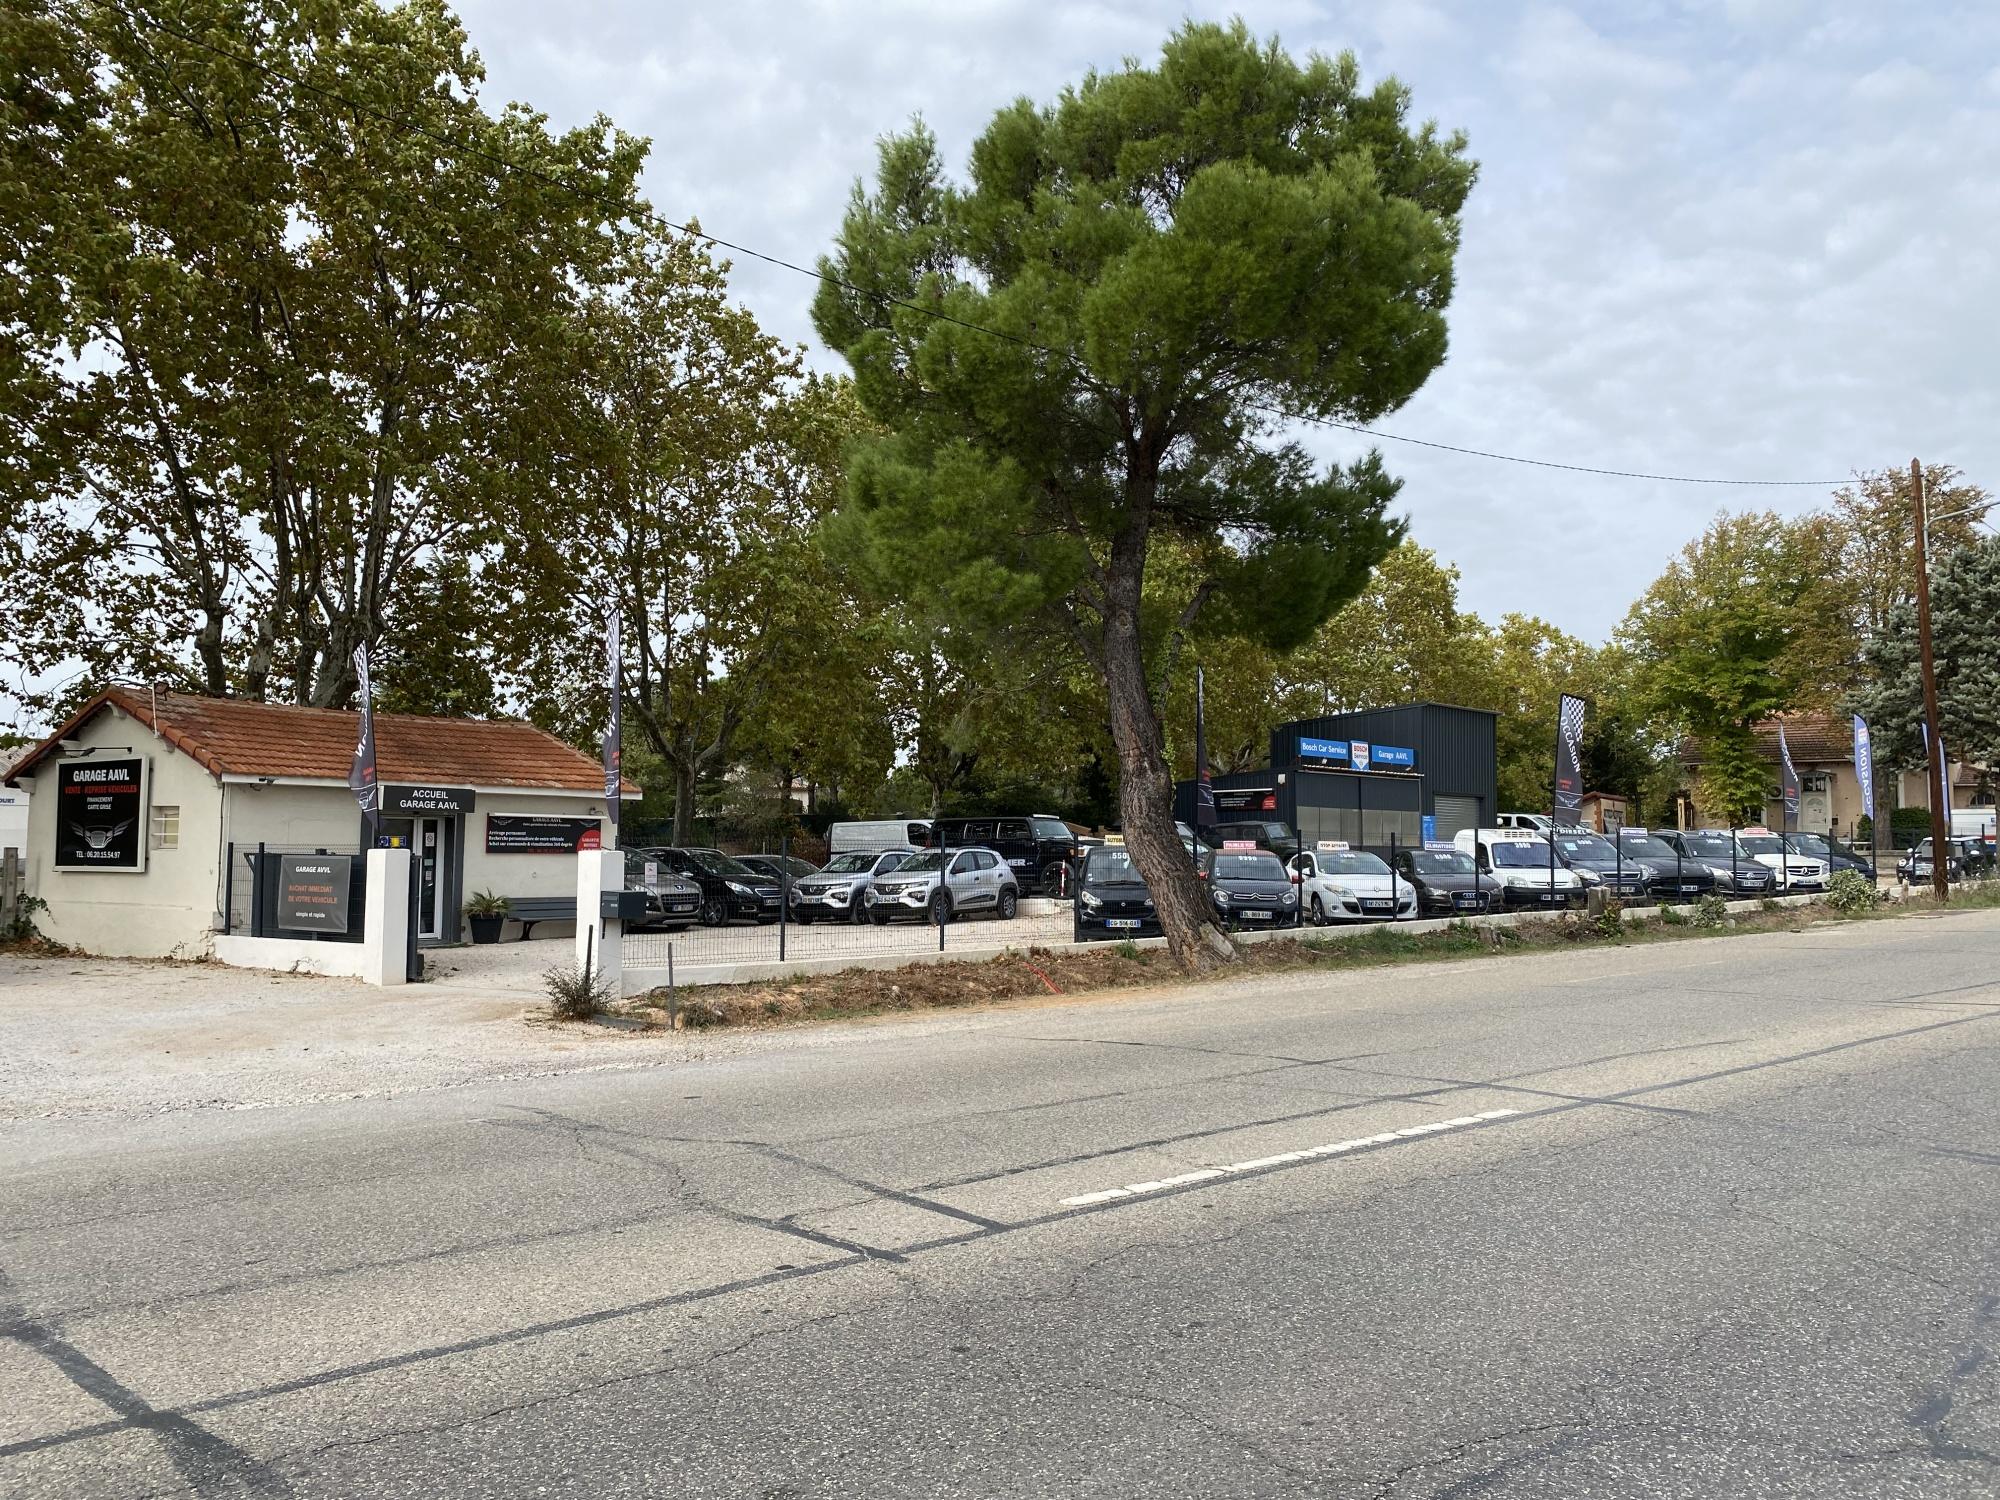 Garage Aavl  -  Bosch Car Service Aix En Provence